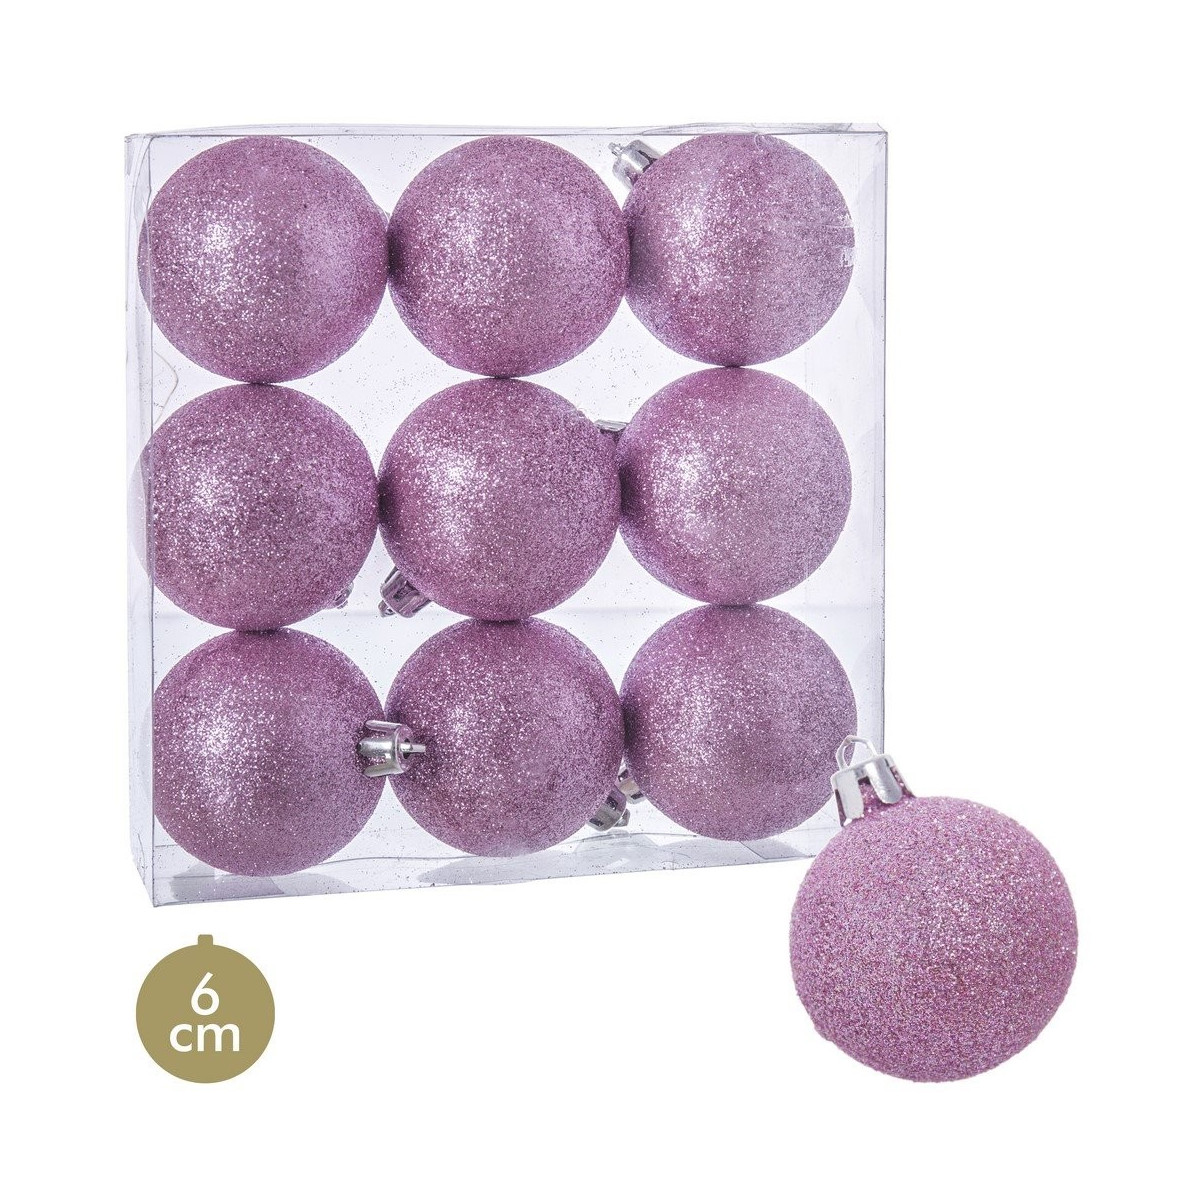 S 9 bolas purpurina plástico rosa 6 x 6 x 6 cm